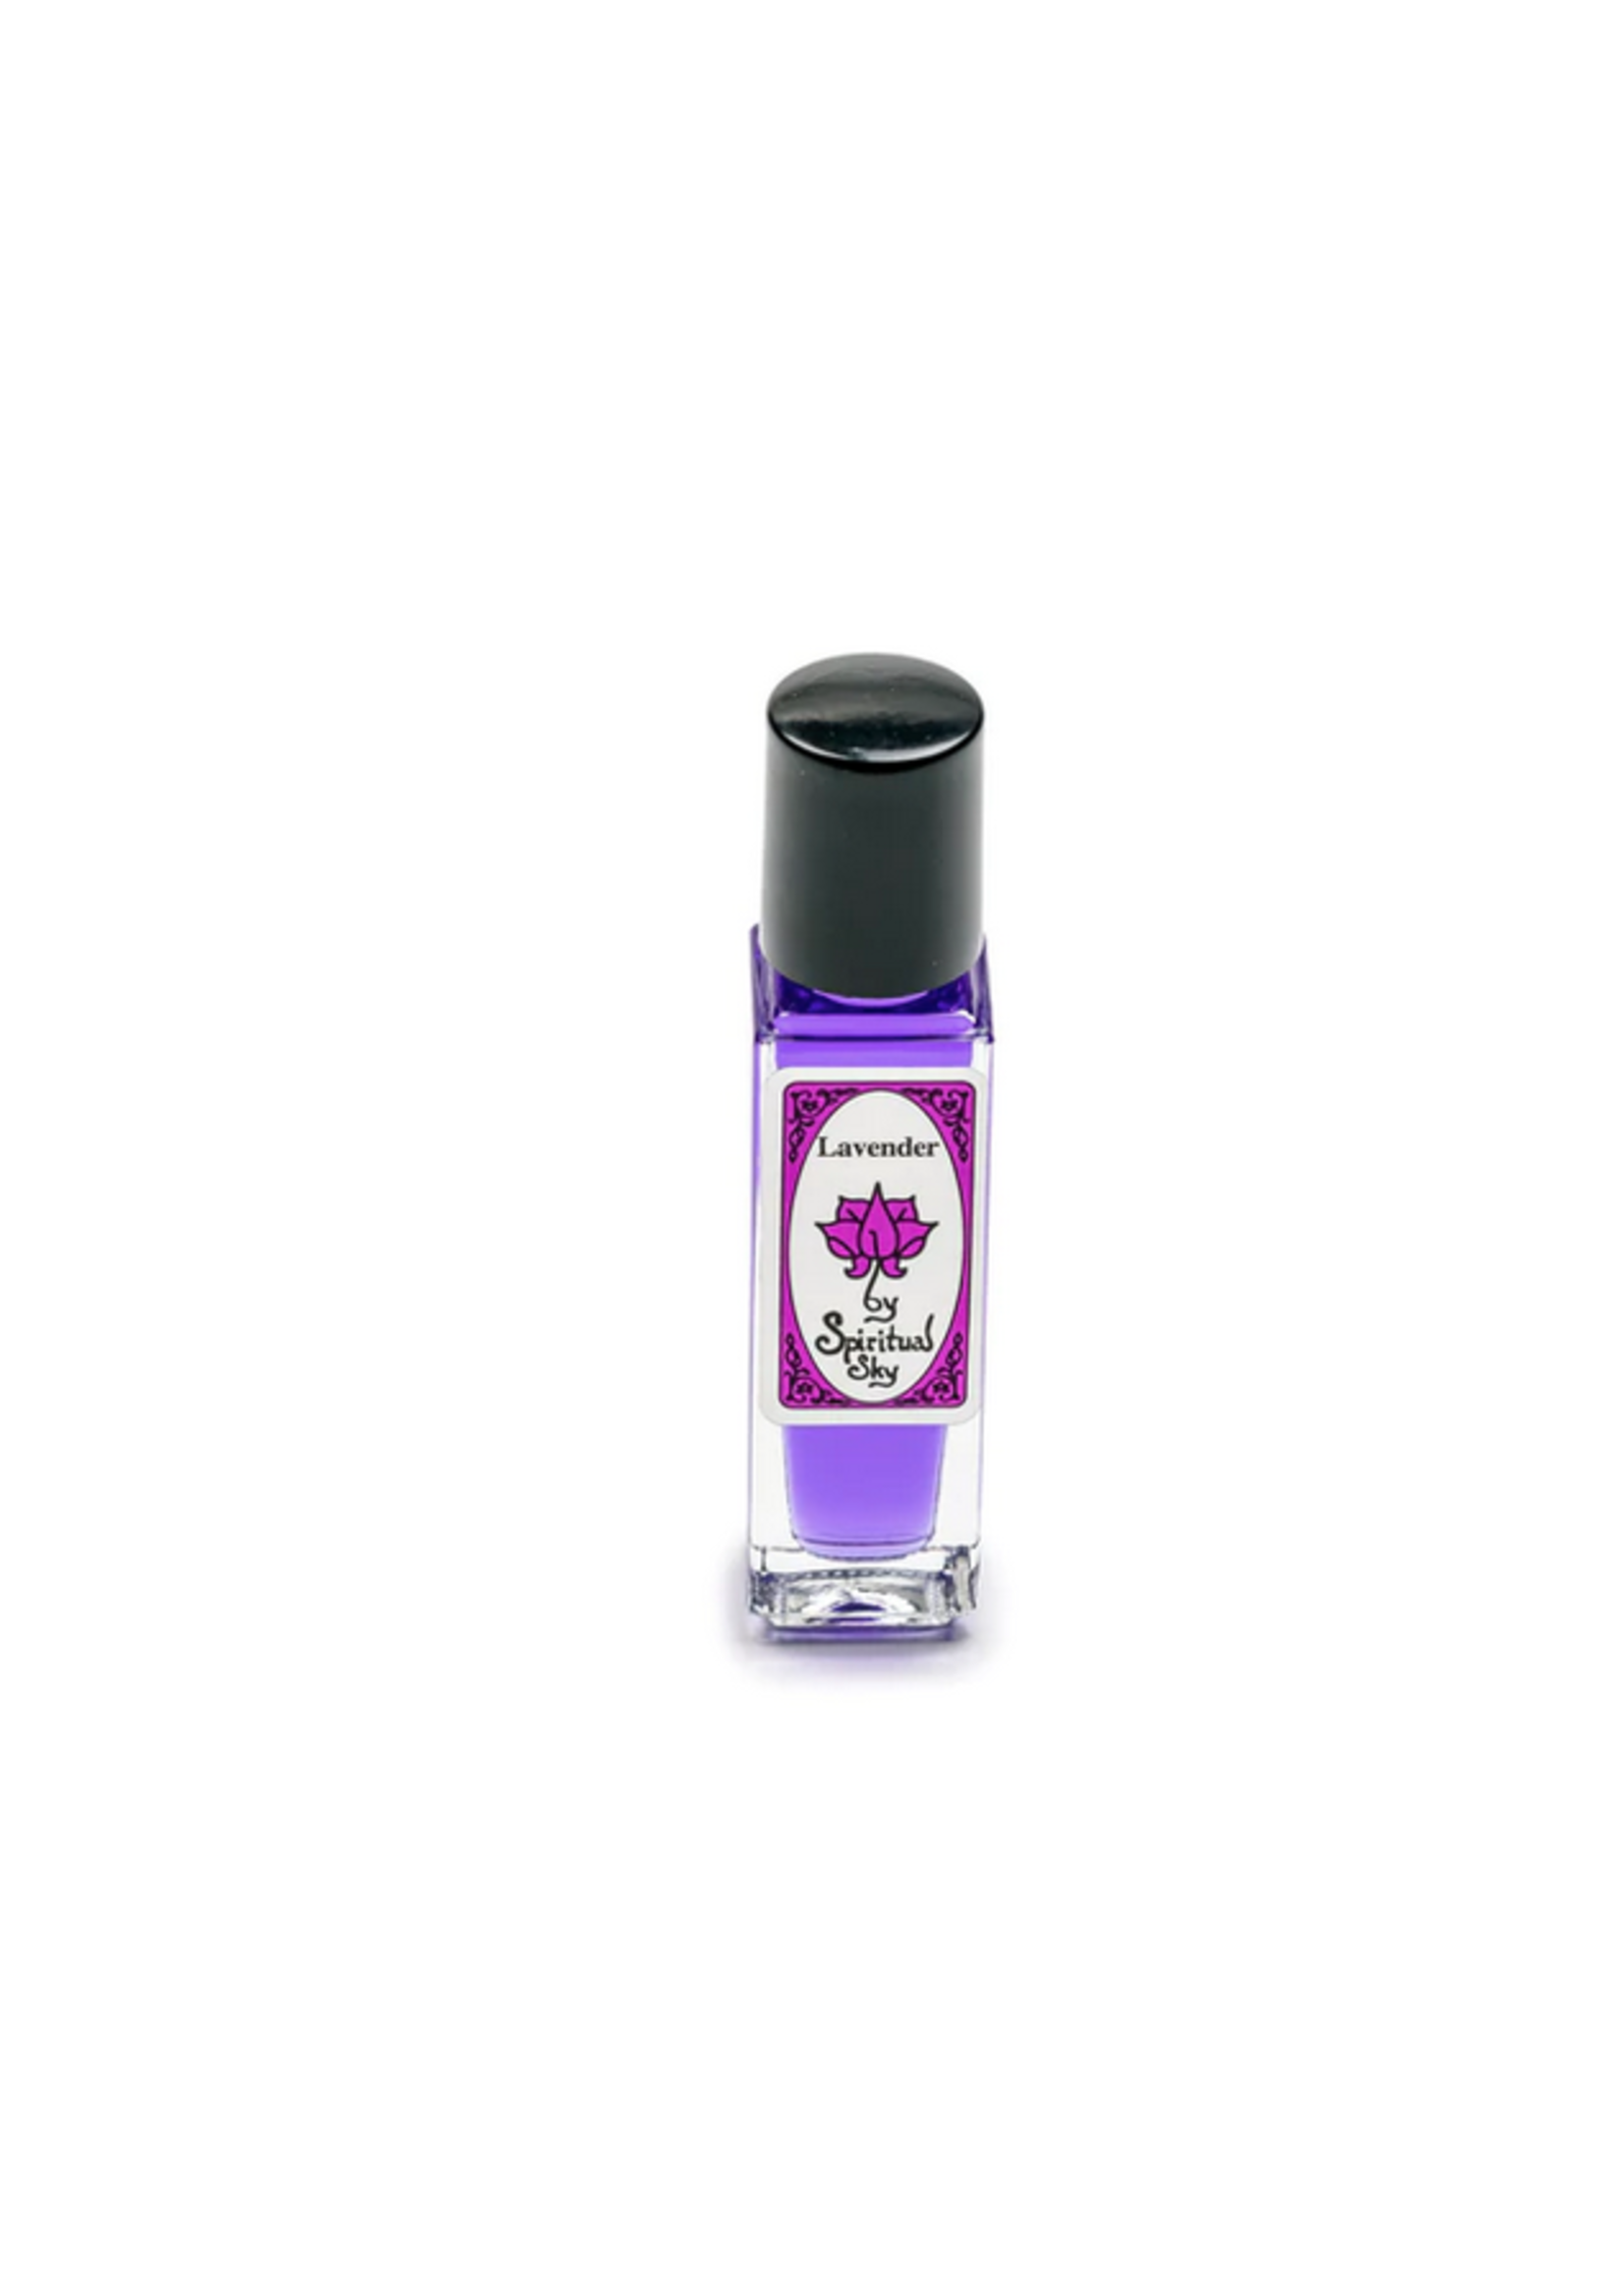 Spiritual Sky Spiritual Sky Perfumed Oil  Carded 8.5ml Lavender